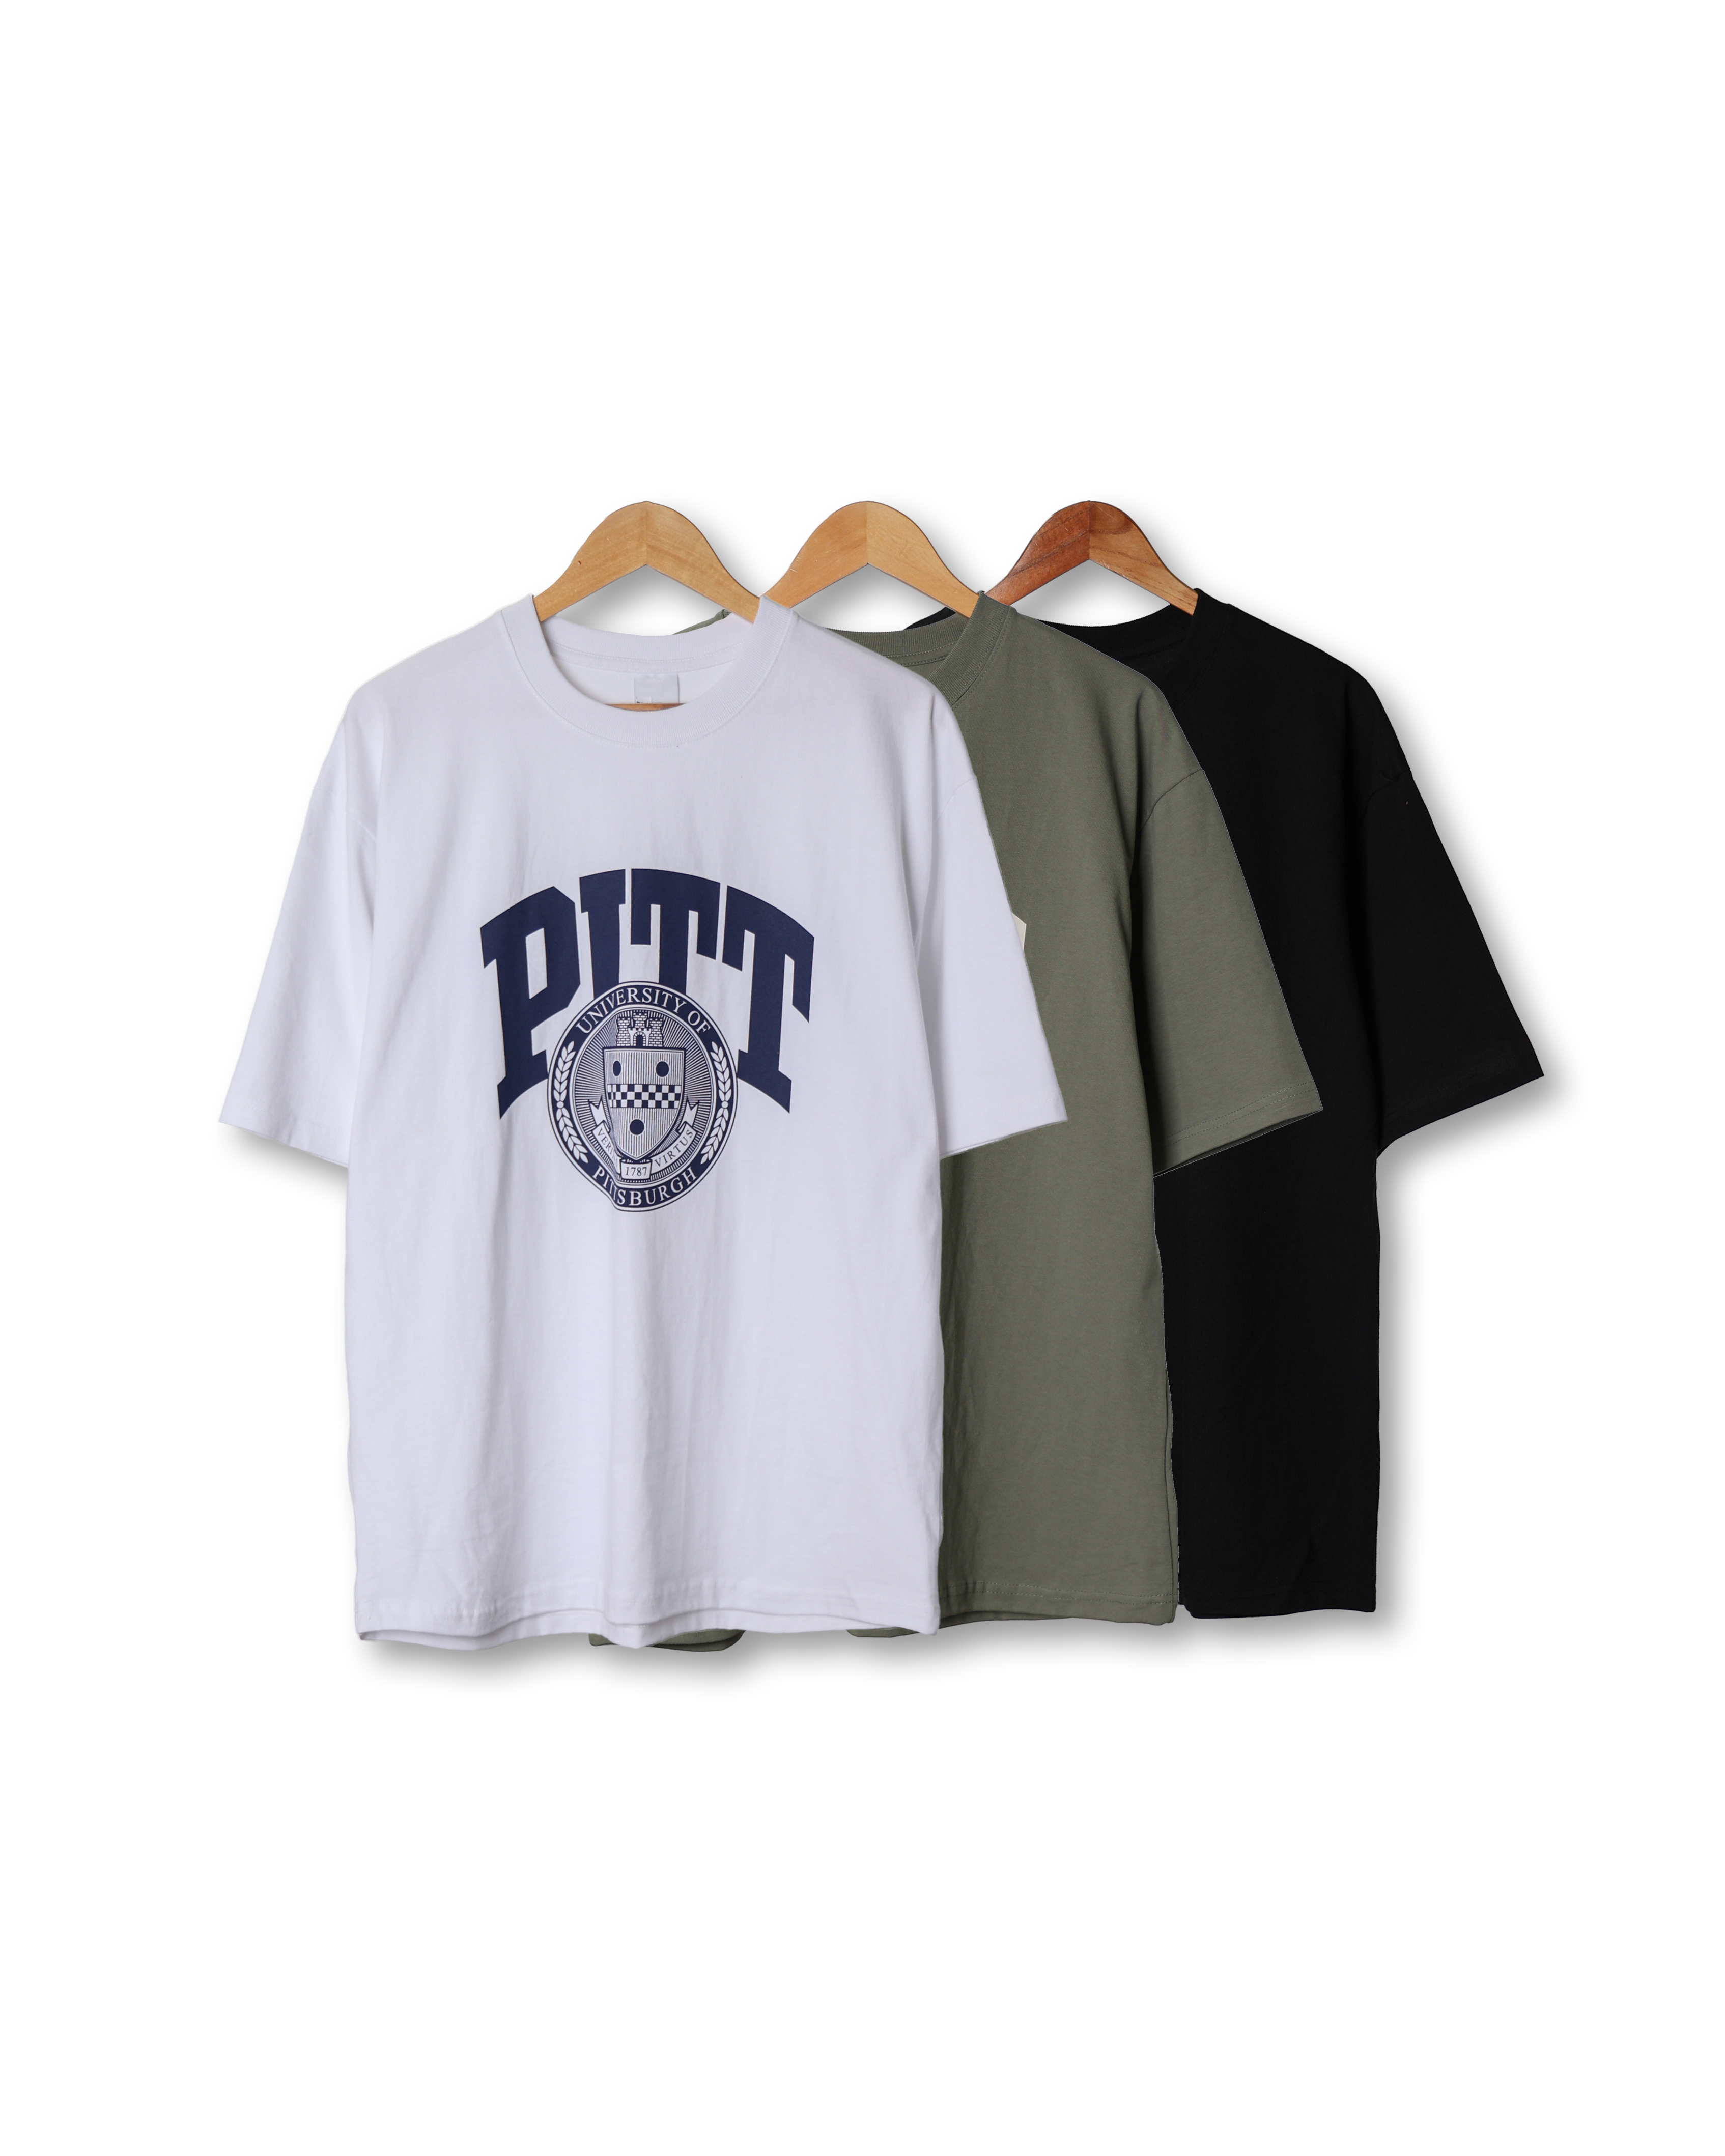 HAML PITT Universe Density T Shirts (Black/Olive/White)